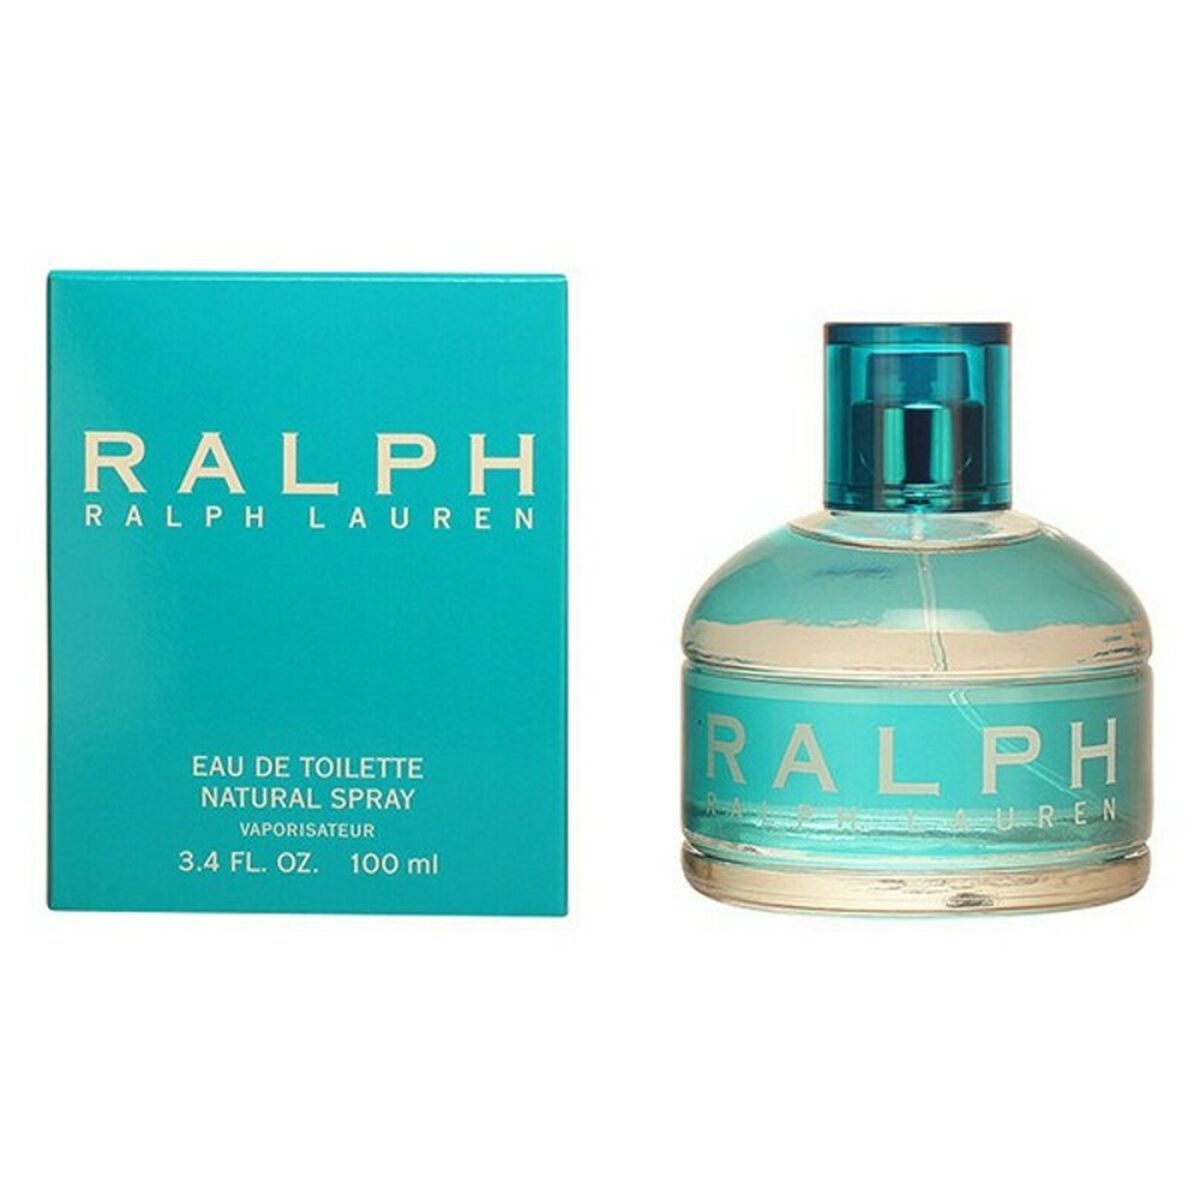 Perfume des femmes Ralph Lauren EDT